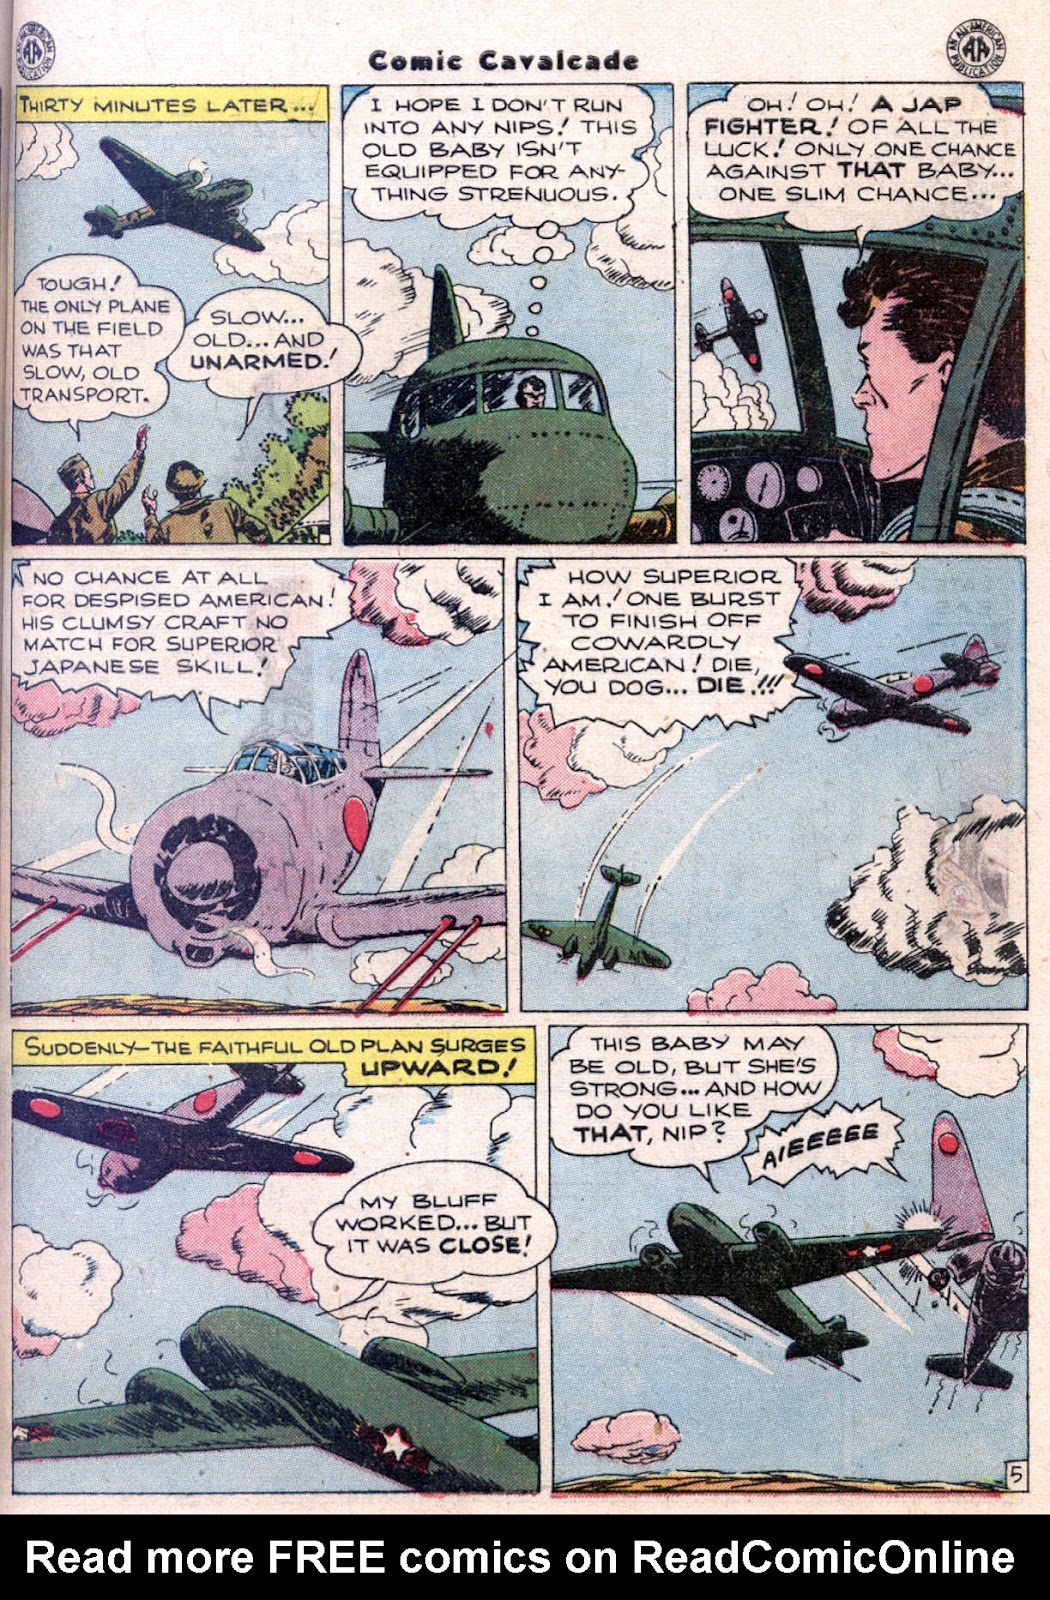 Comic Cavalcade issue 11 - Page 47